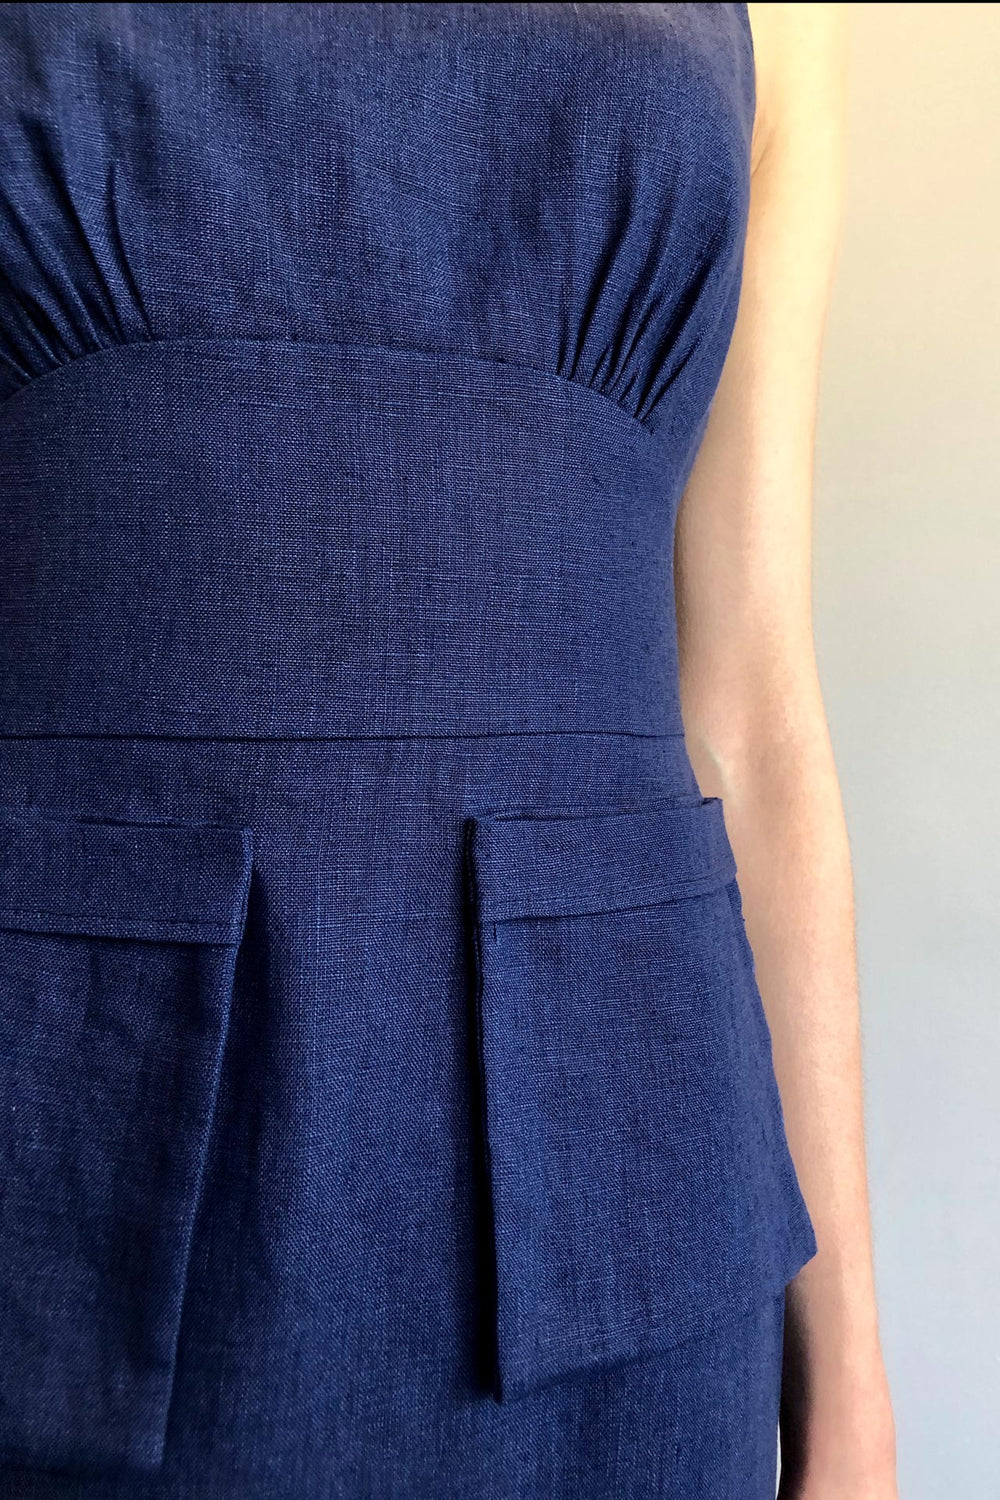 Fashion Designer CARL KAPP collection | Boulder Linen dress Navy | Sydney Australia